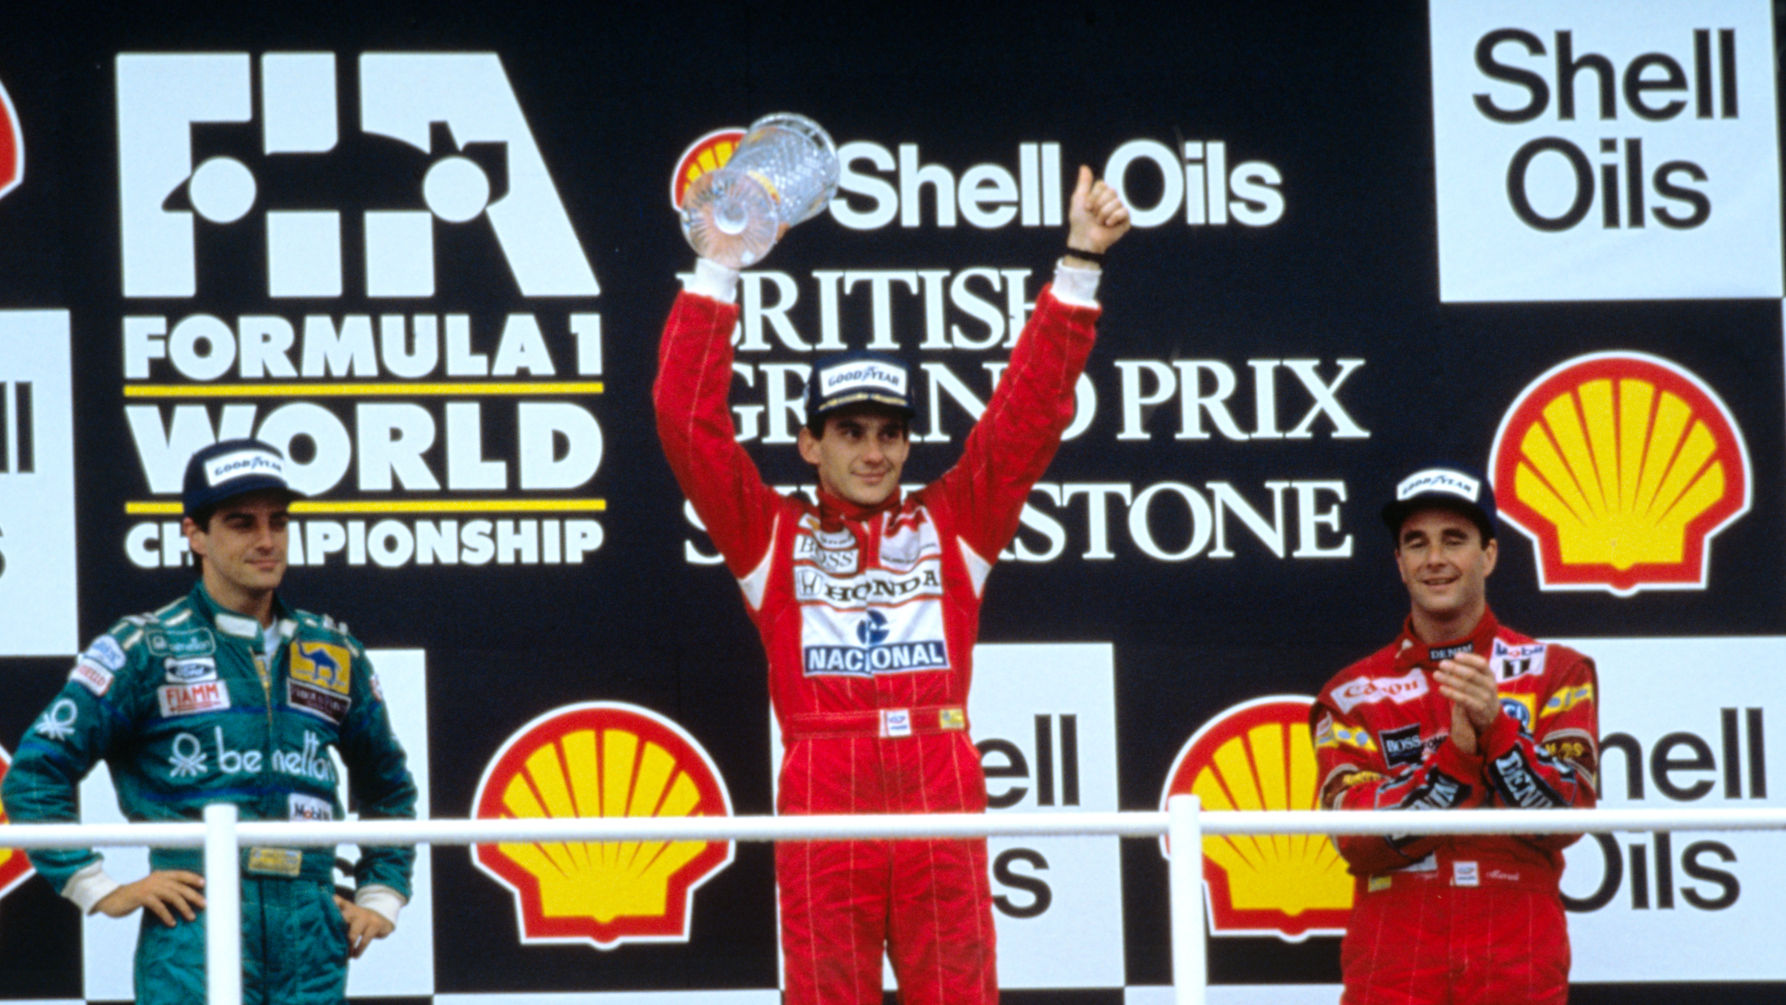 1988 - Senna secured pole position in the McLaren MP4/4 at Monaco Photographer Credit Norio Koike